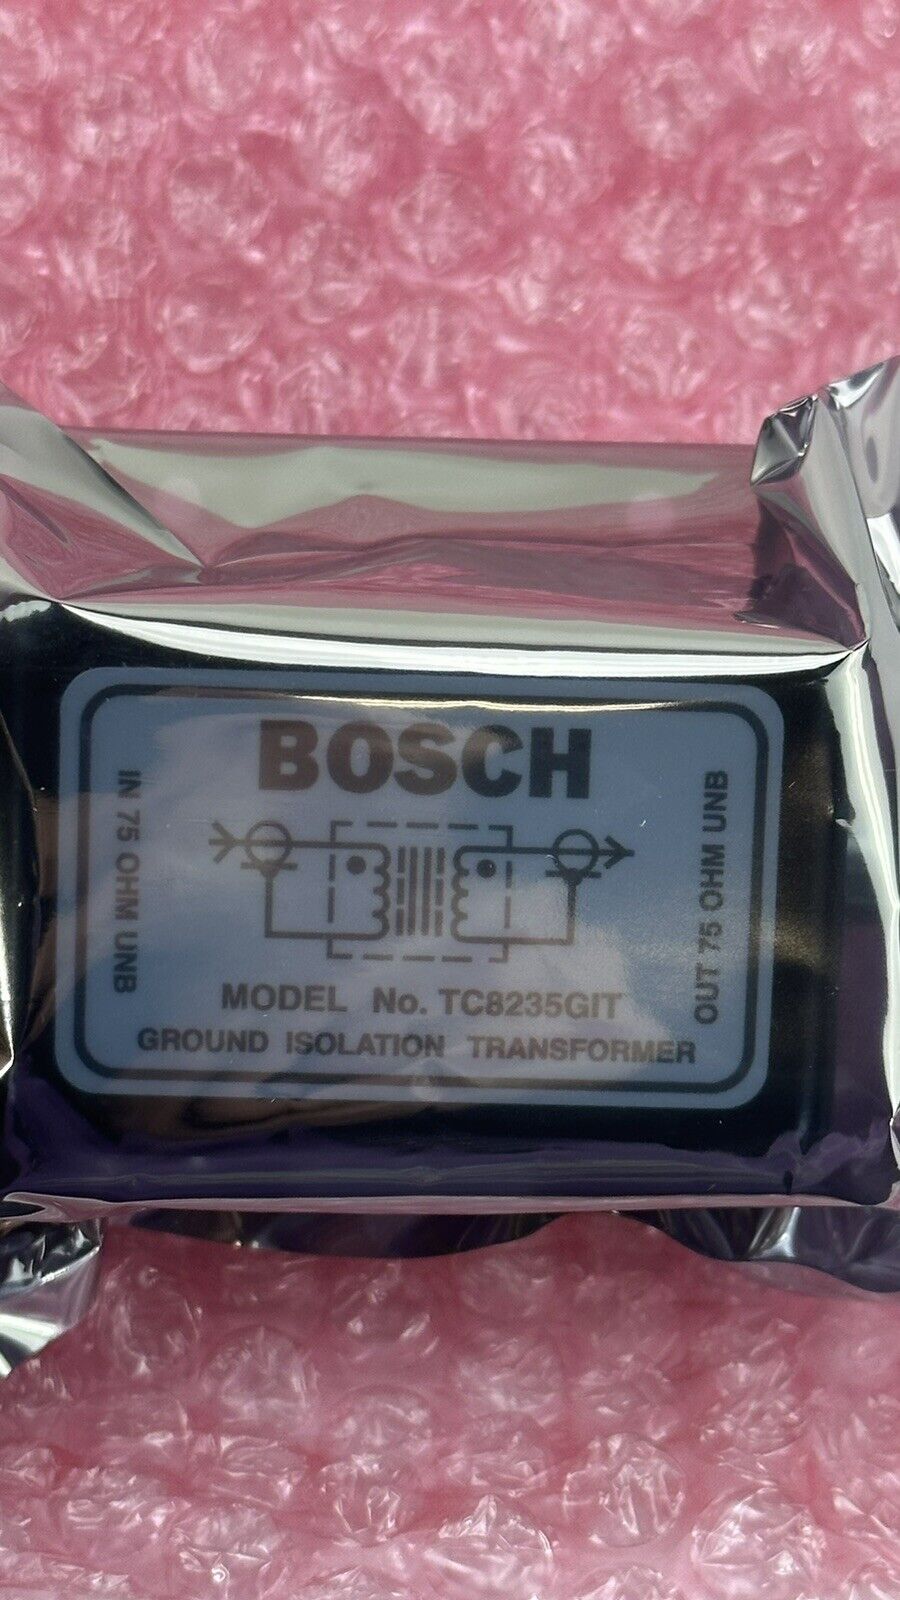 Bosch TC8235GIT Ground Loop Isolation Transformer for Video/Data Lines 75Ohm BNC